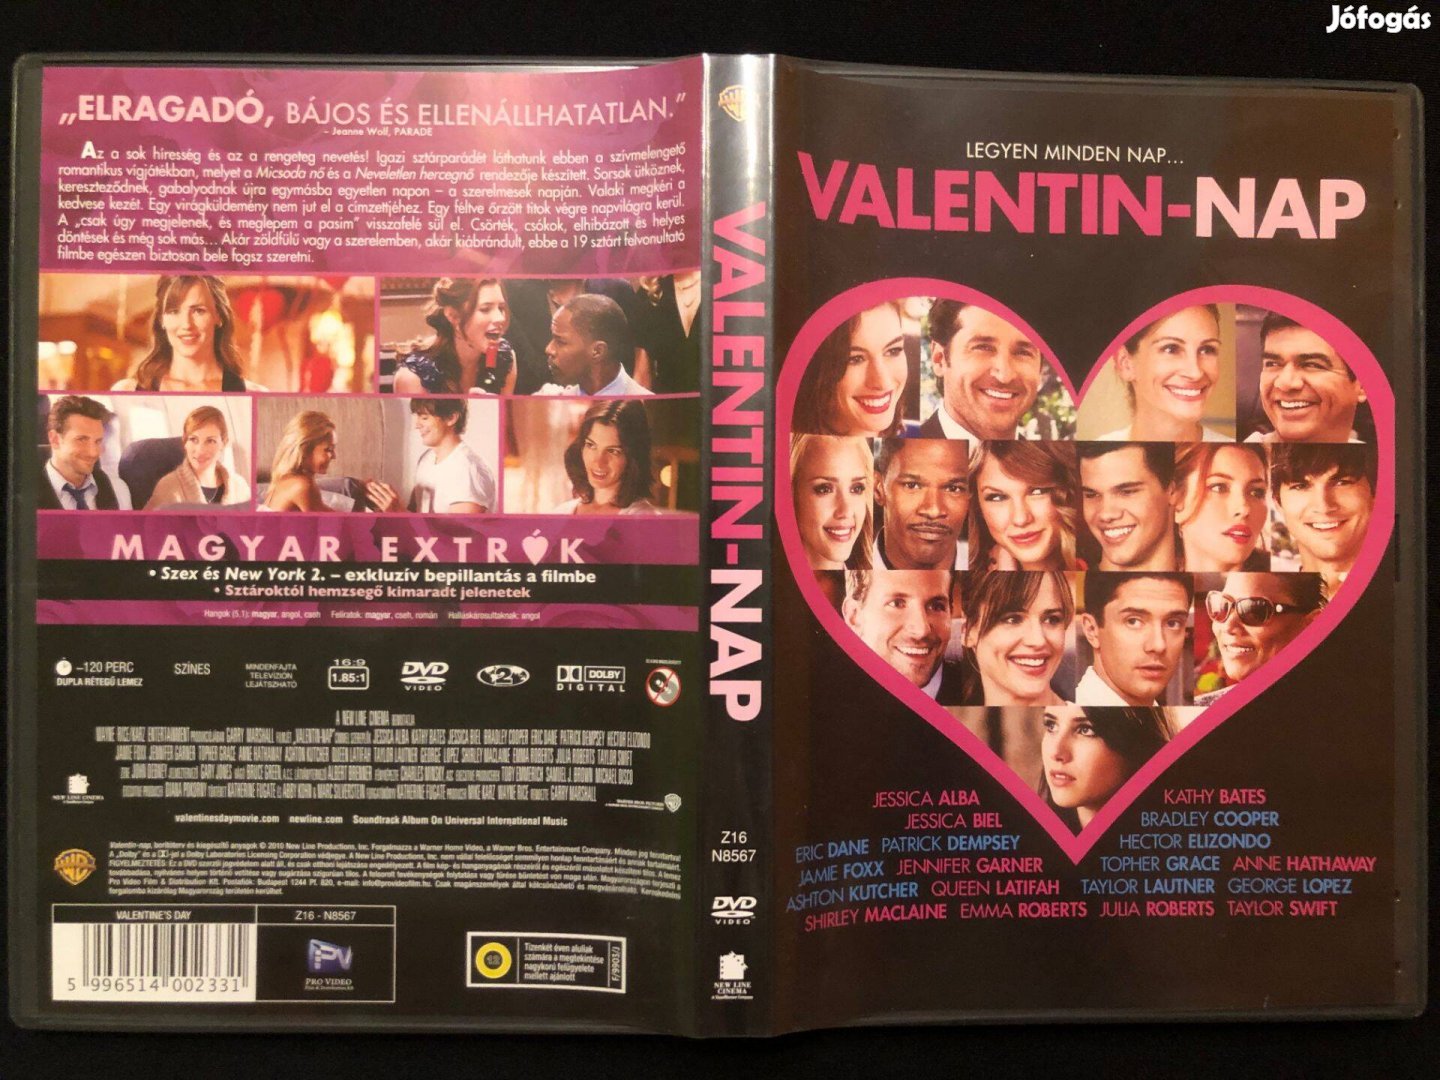 Valentin-nap (karcmentes, Jessica Alba, Bradley Cooper) DVD